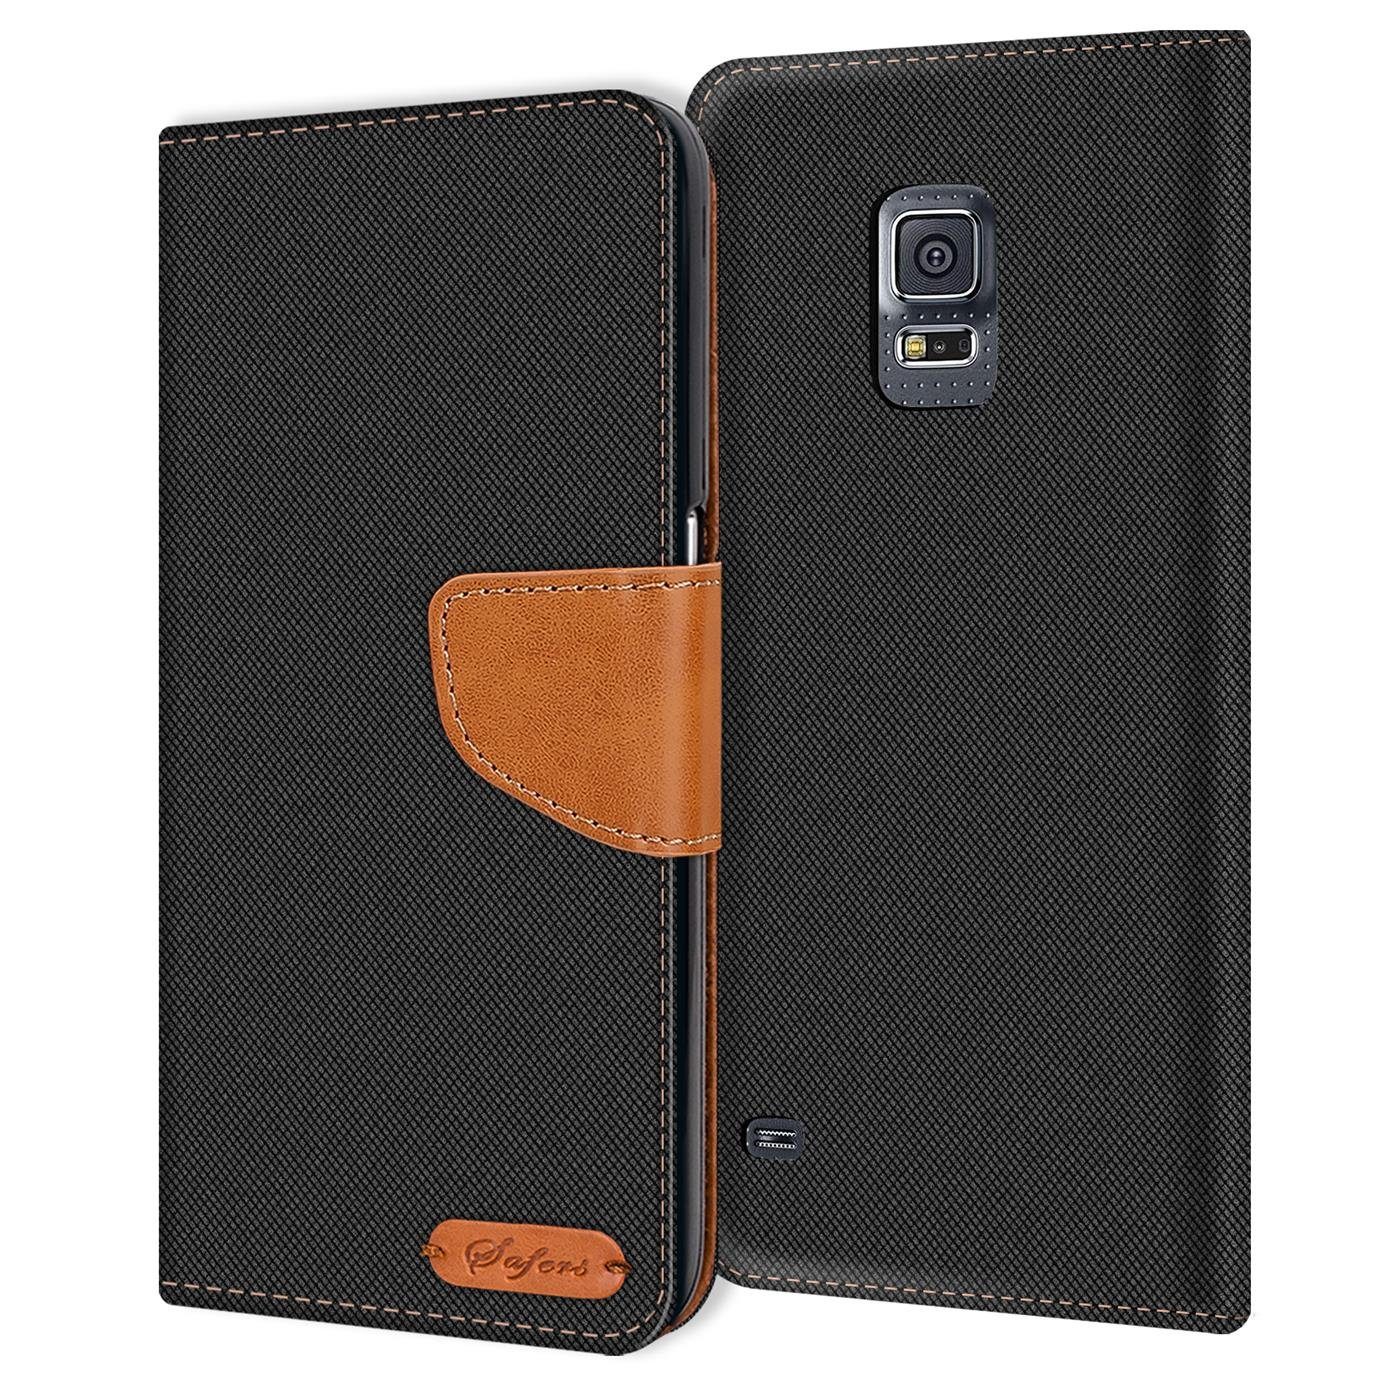 CoolGadget Handyhülle Denim Schutzhülle Flip Case für Samsung Galaxy S5 Mini  4,5 Zoll, Book Cover Handy Tasche Hülle für Samsung S5 Mini Klapphülle